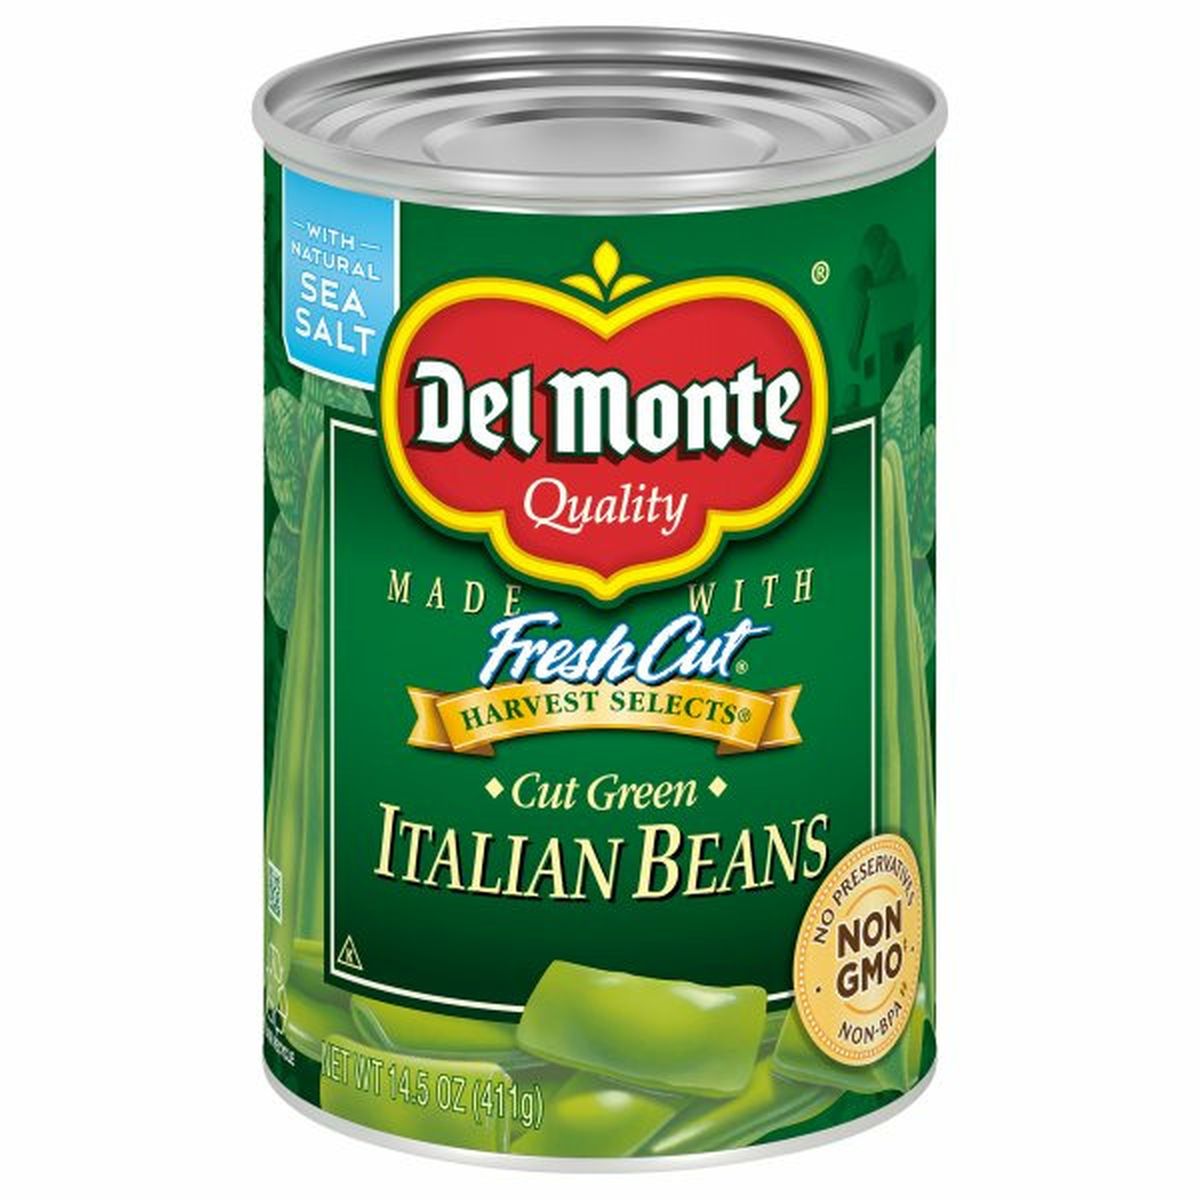 Calories in Del Monte Fresh Cut Italian Beans, Cut Green, Harvest Select